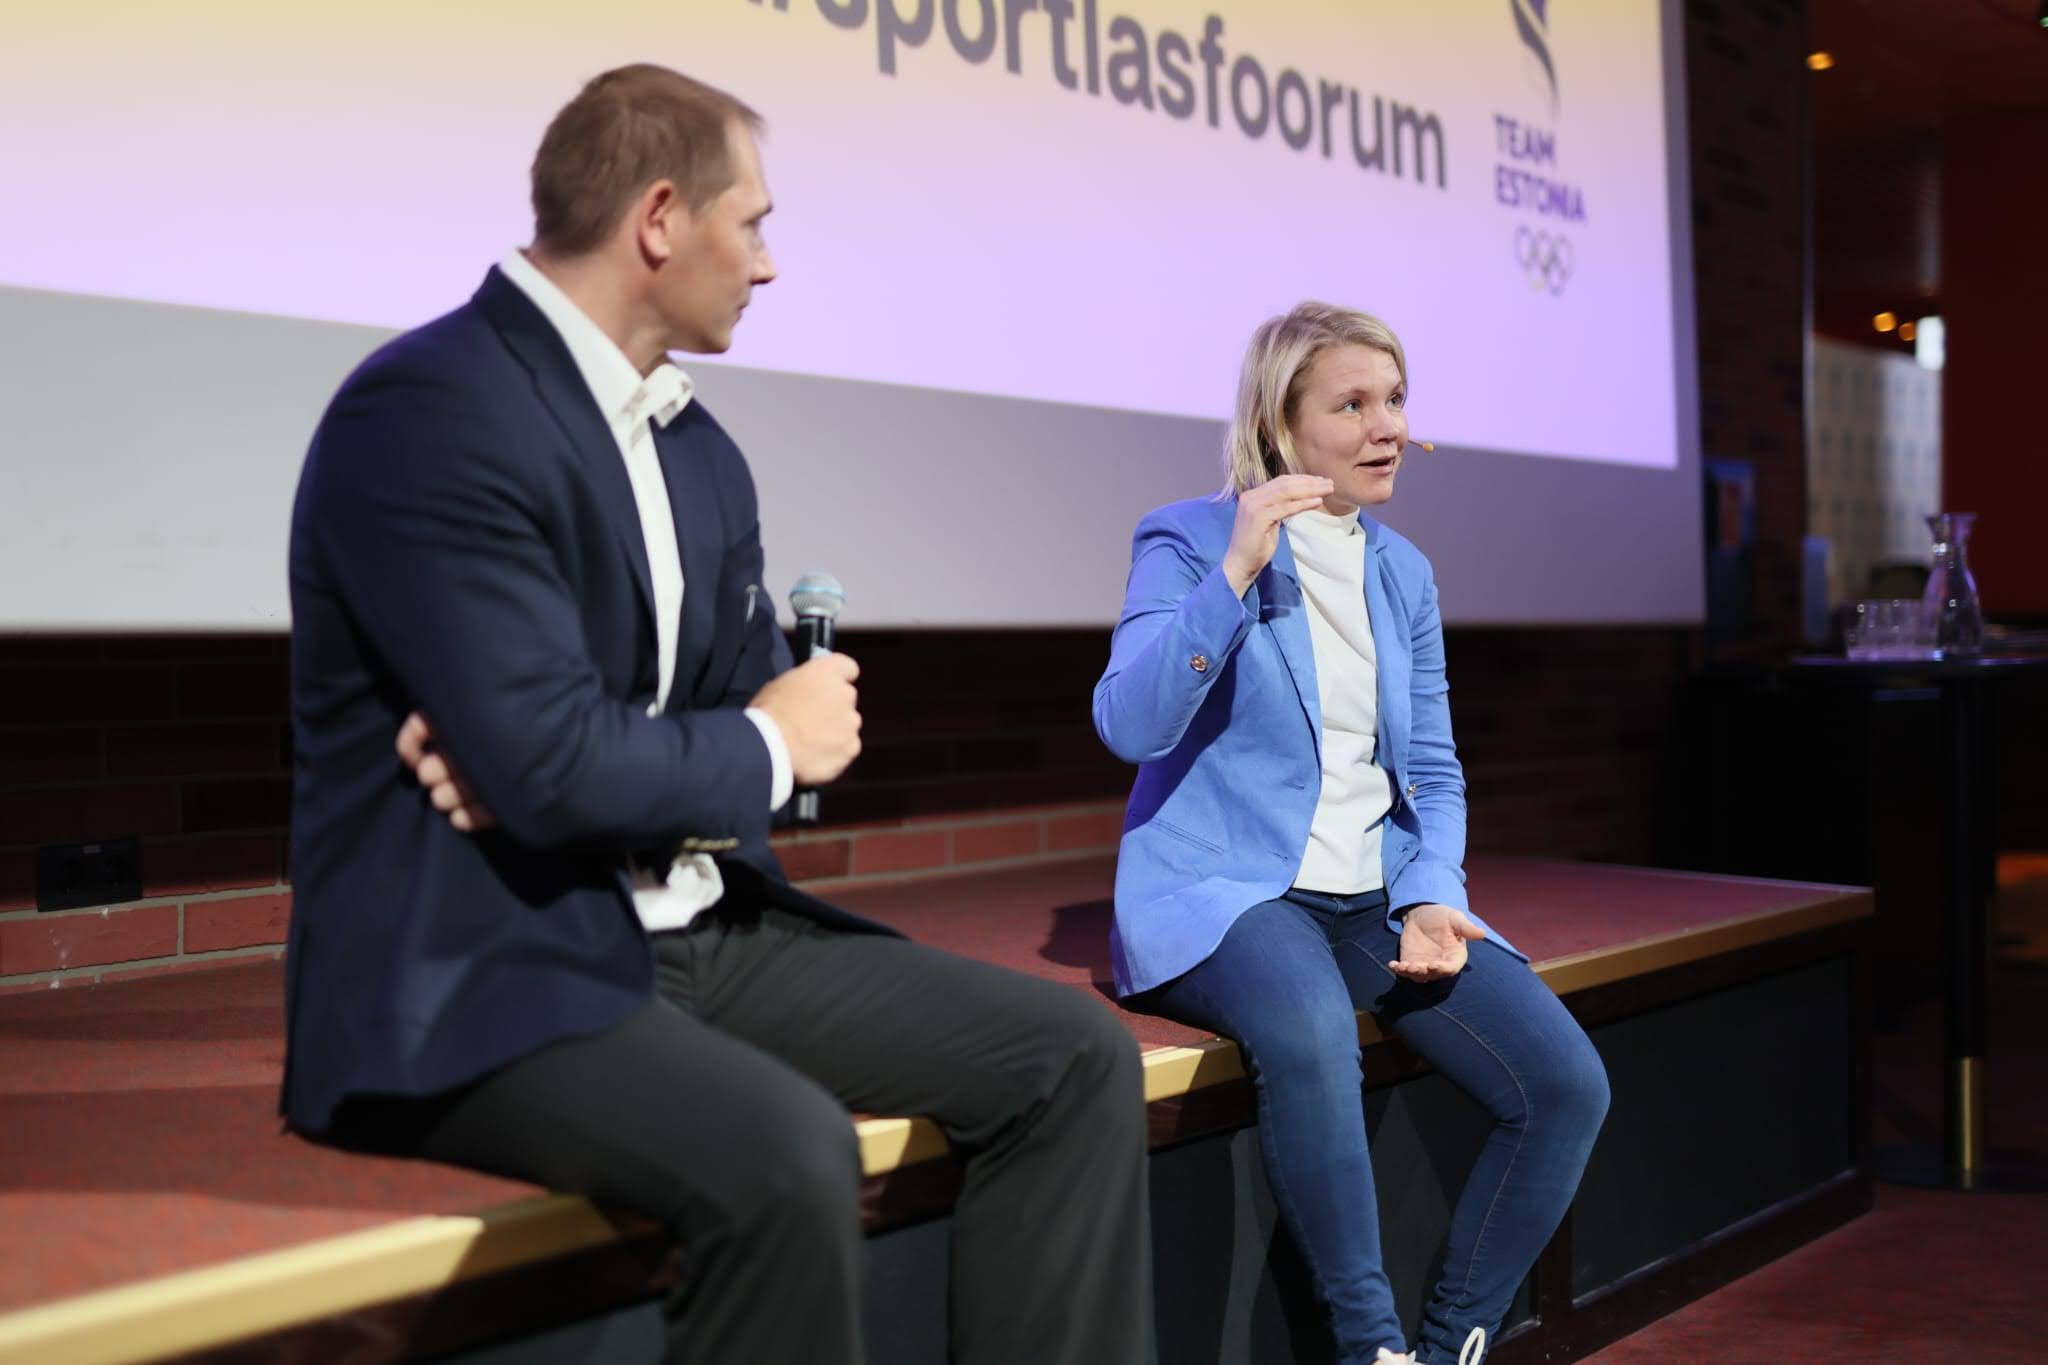 Terho praises Estonian Olympic Committee's "positive approach" of athletes' forum